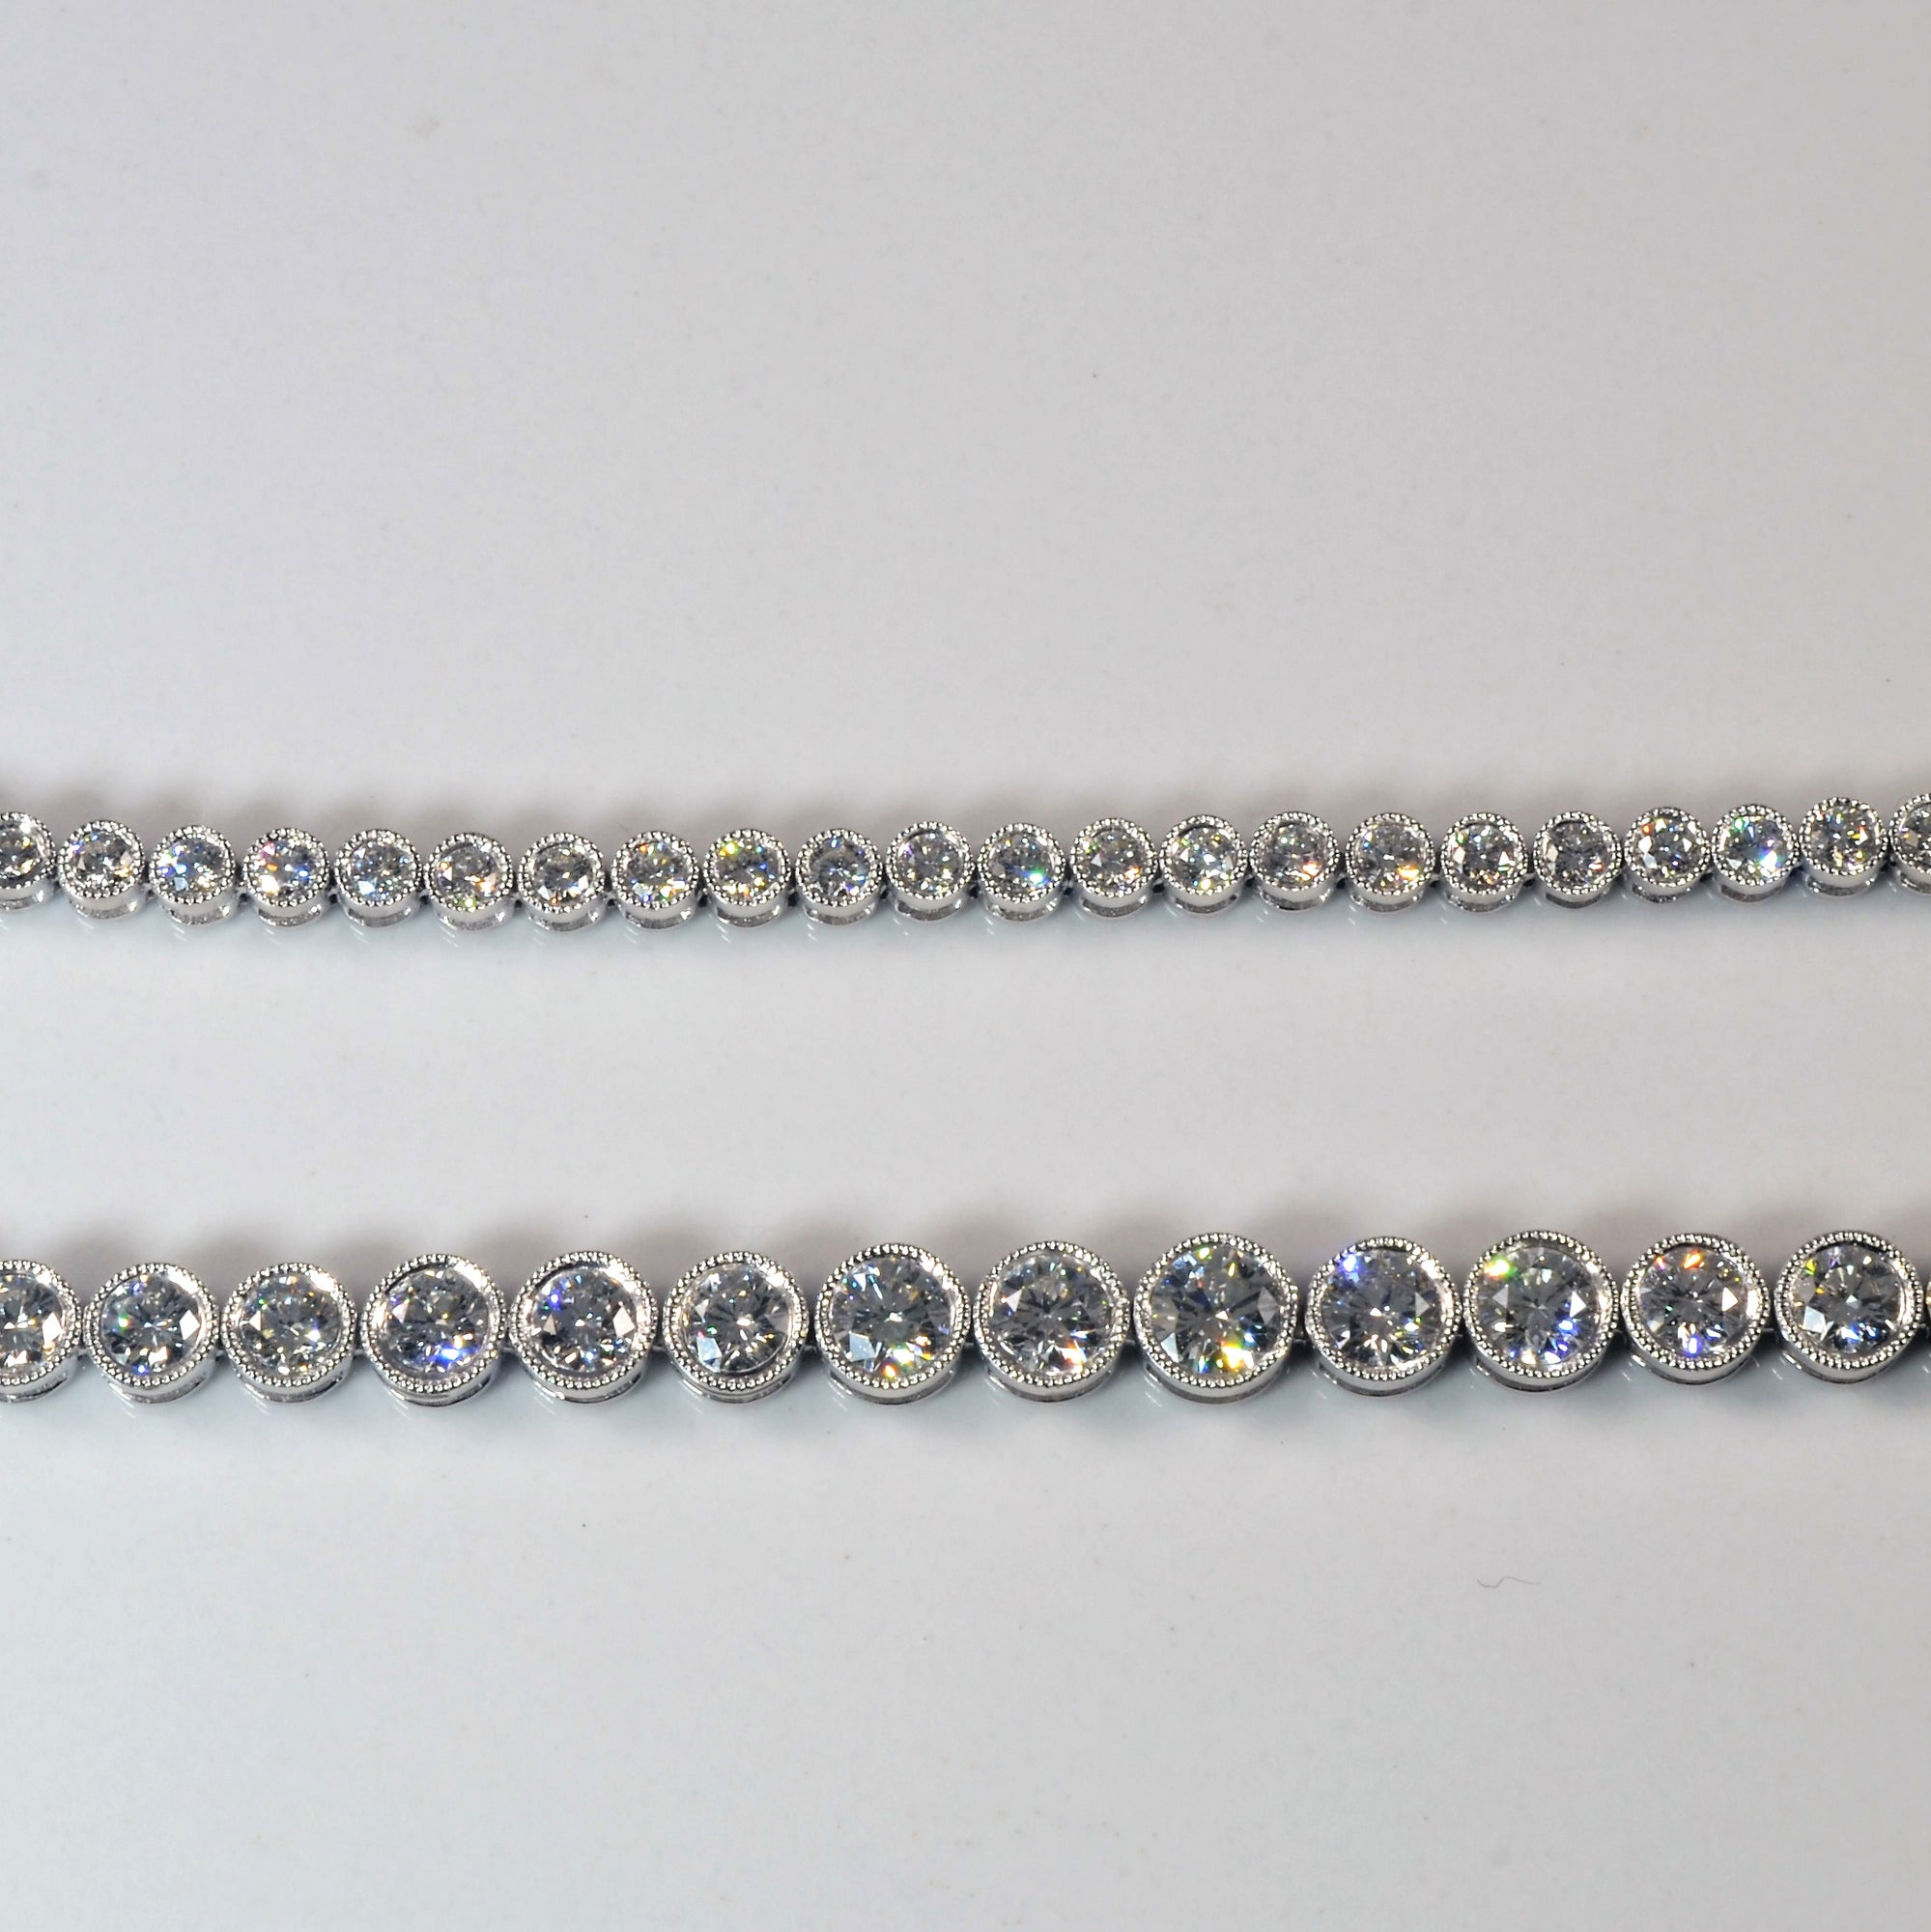 Bezel Set Graduated Diamond Necklace | 5.89ctw | 16